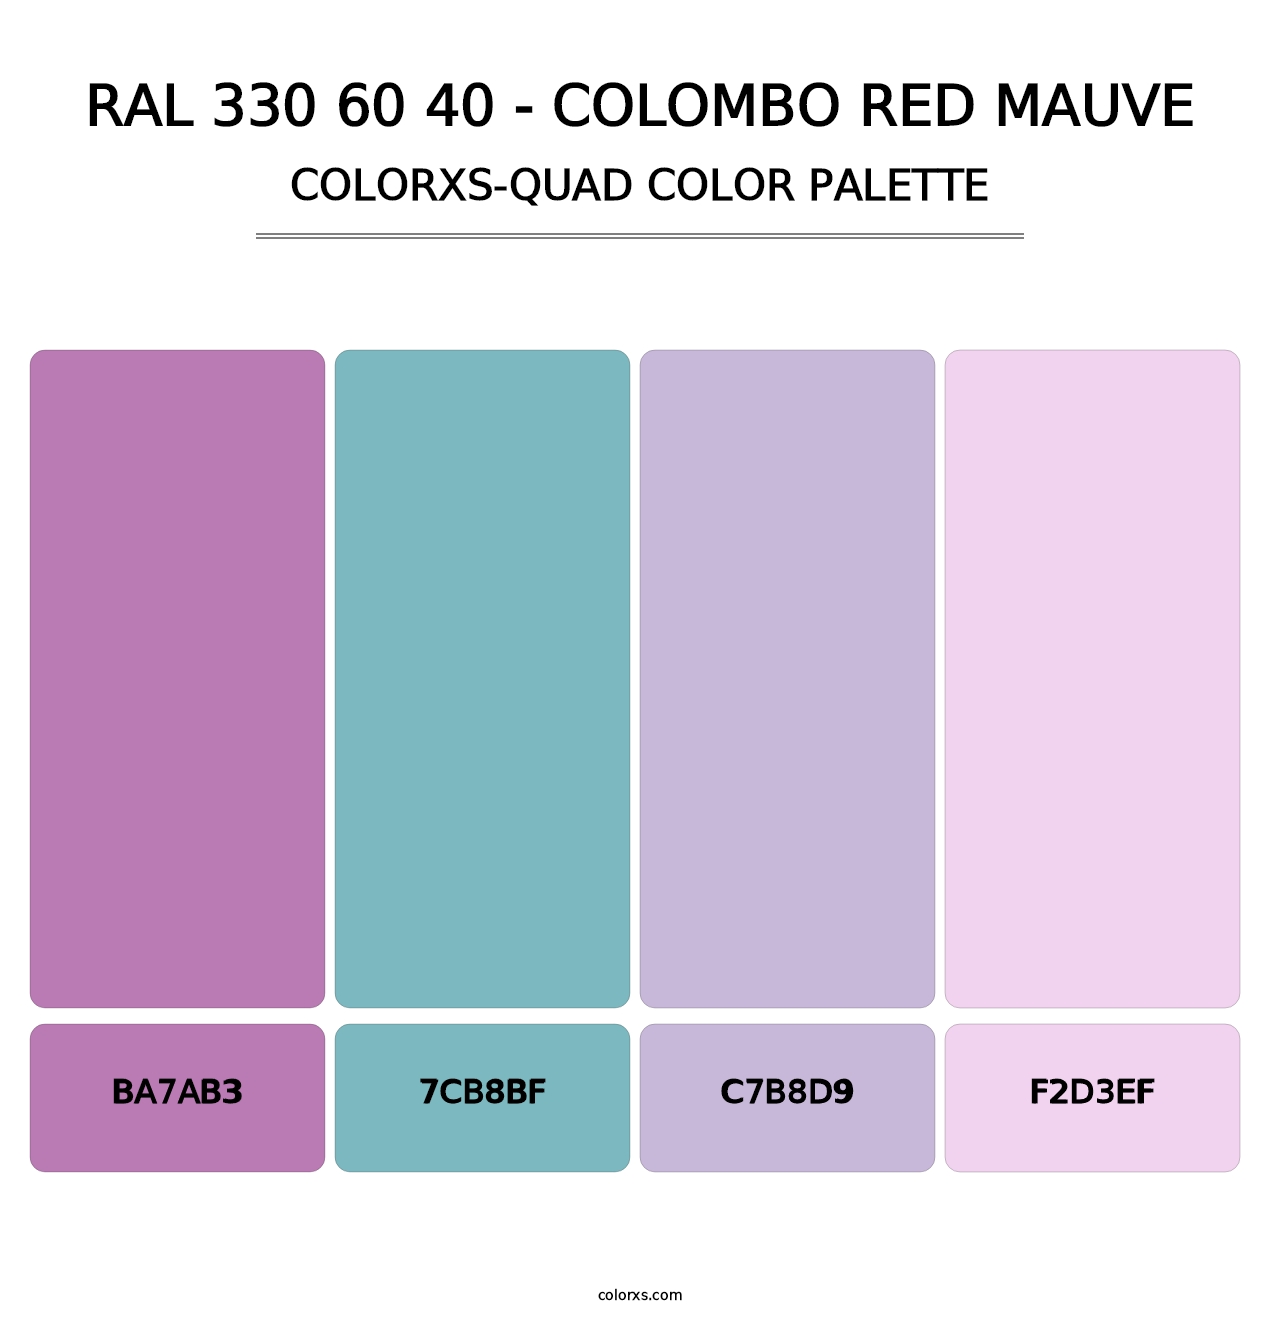 RAL 330 60 40 - Colombo Red Mauve - Colorxs Quad Palette